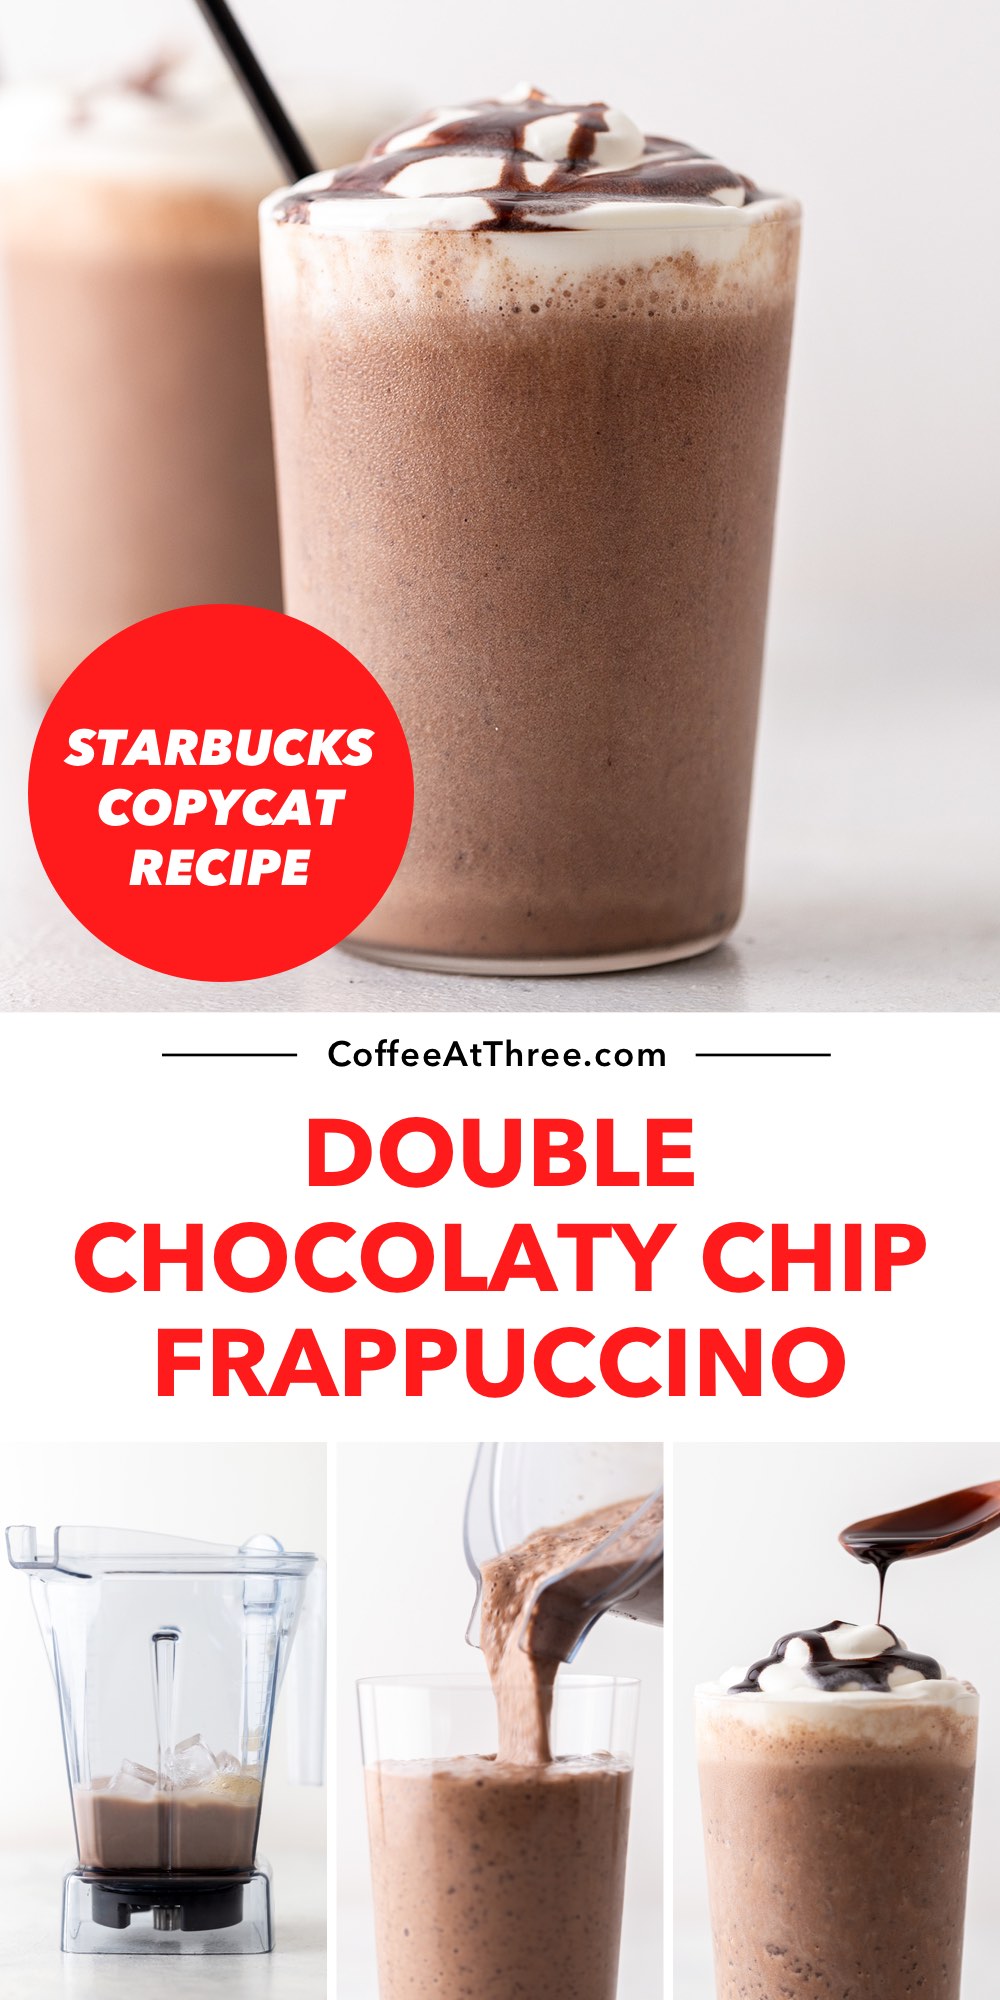 Starbucks Double Chocolaty Chip Frappuccino Copycat